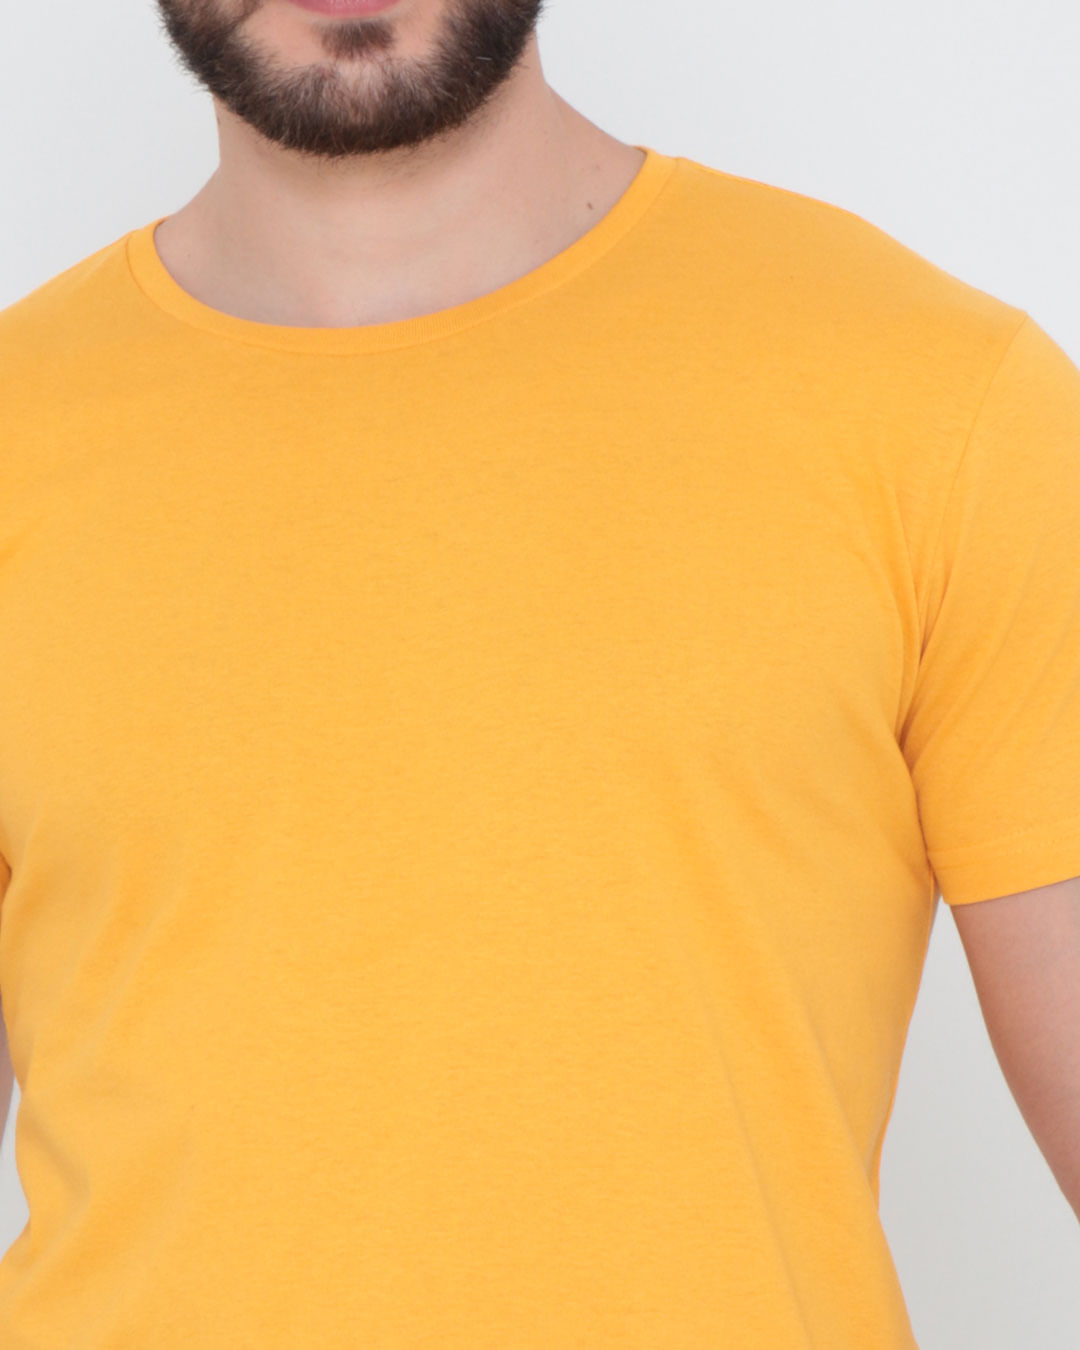 Camiseta-Basica-Manga-Curta-Amarela